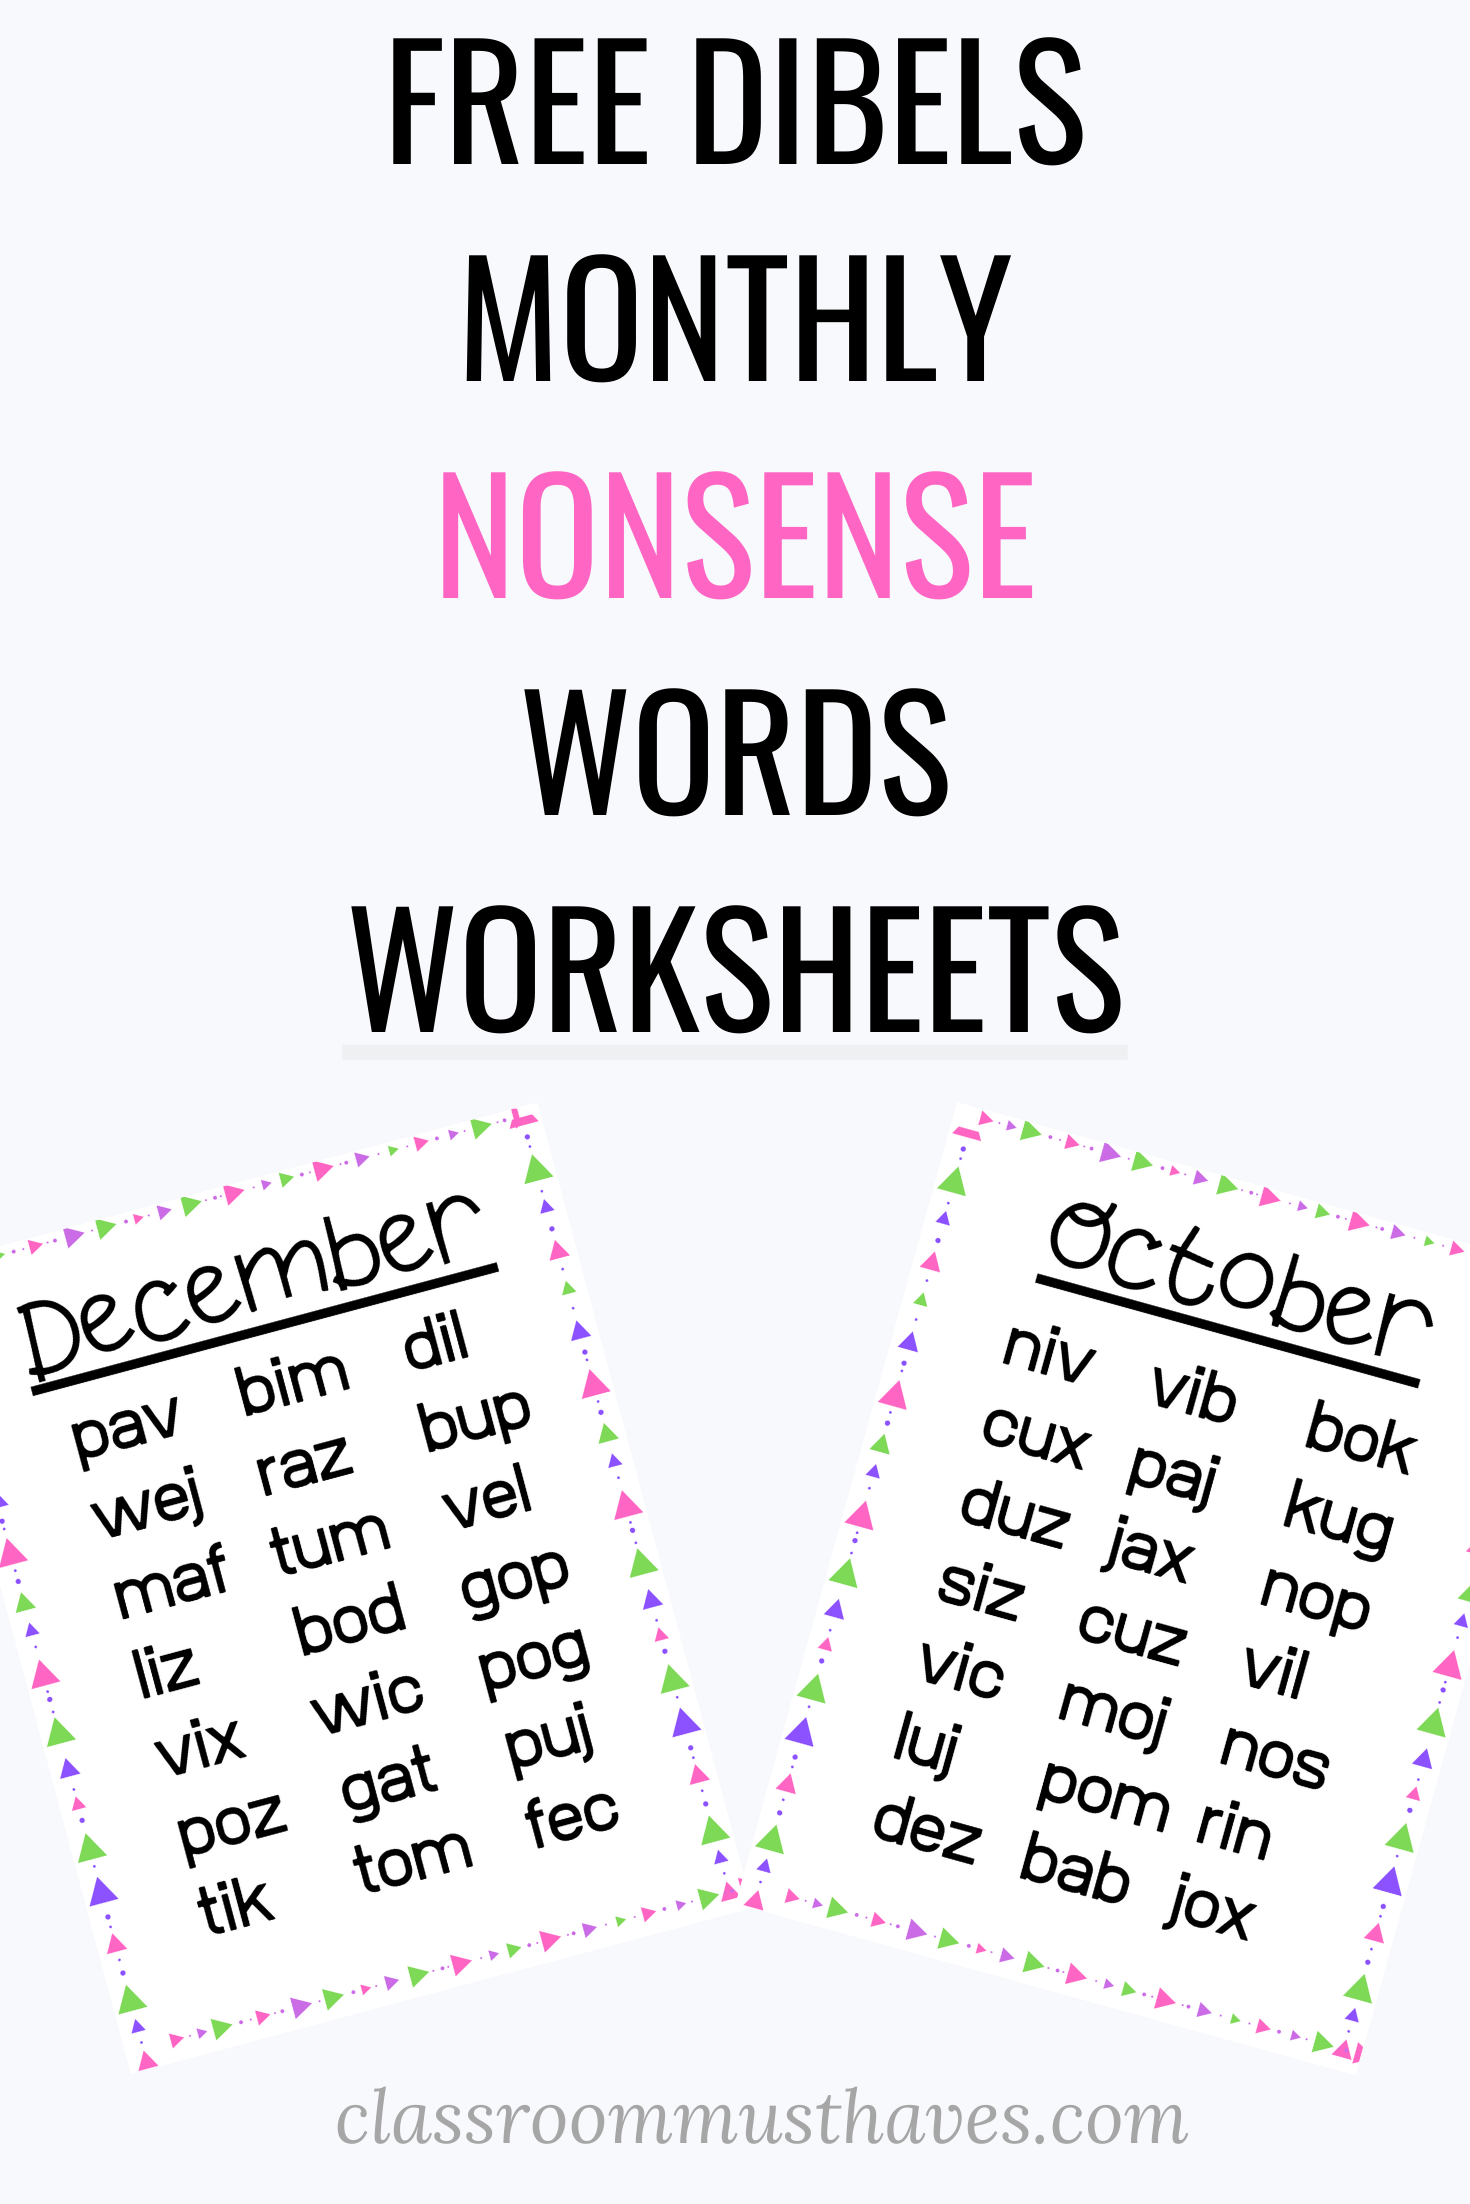 DIBELS Free Nonsense Word Fluency Lists via @classroommusthaves